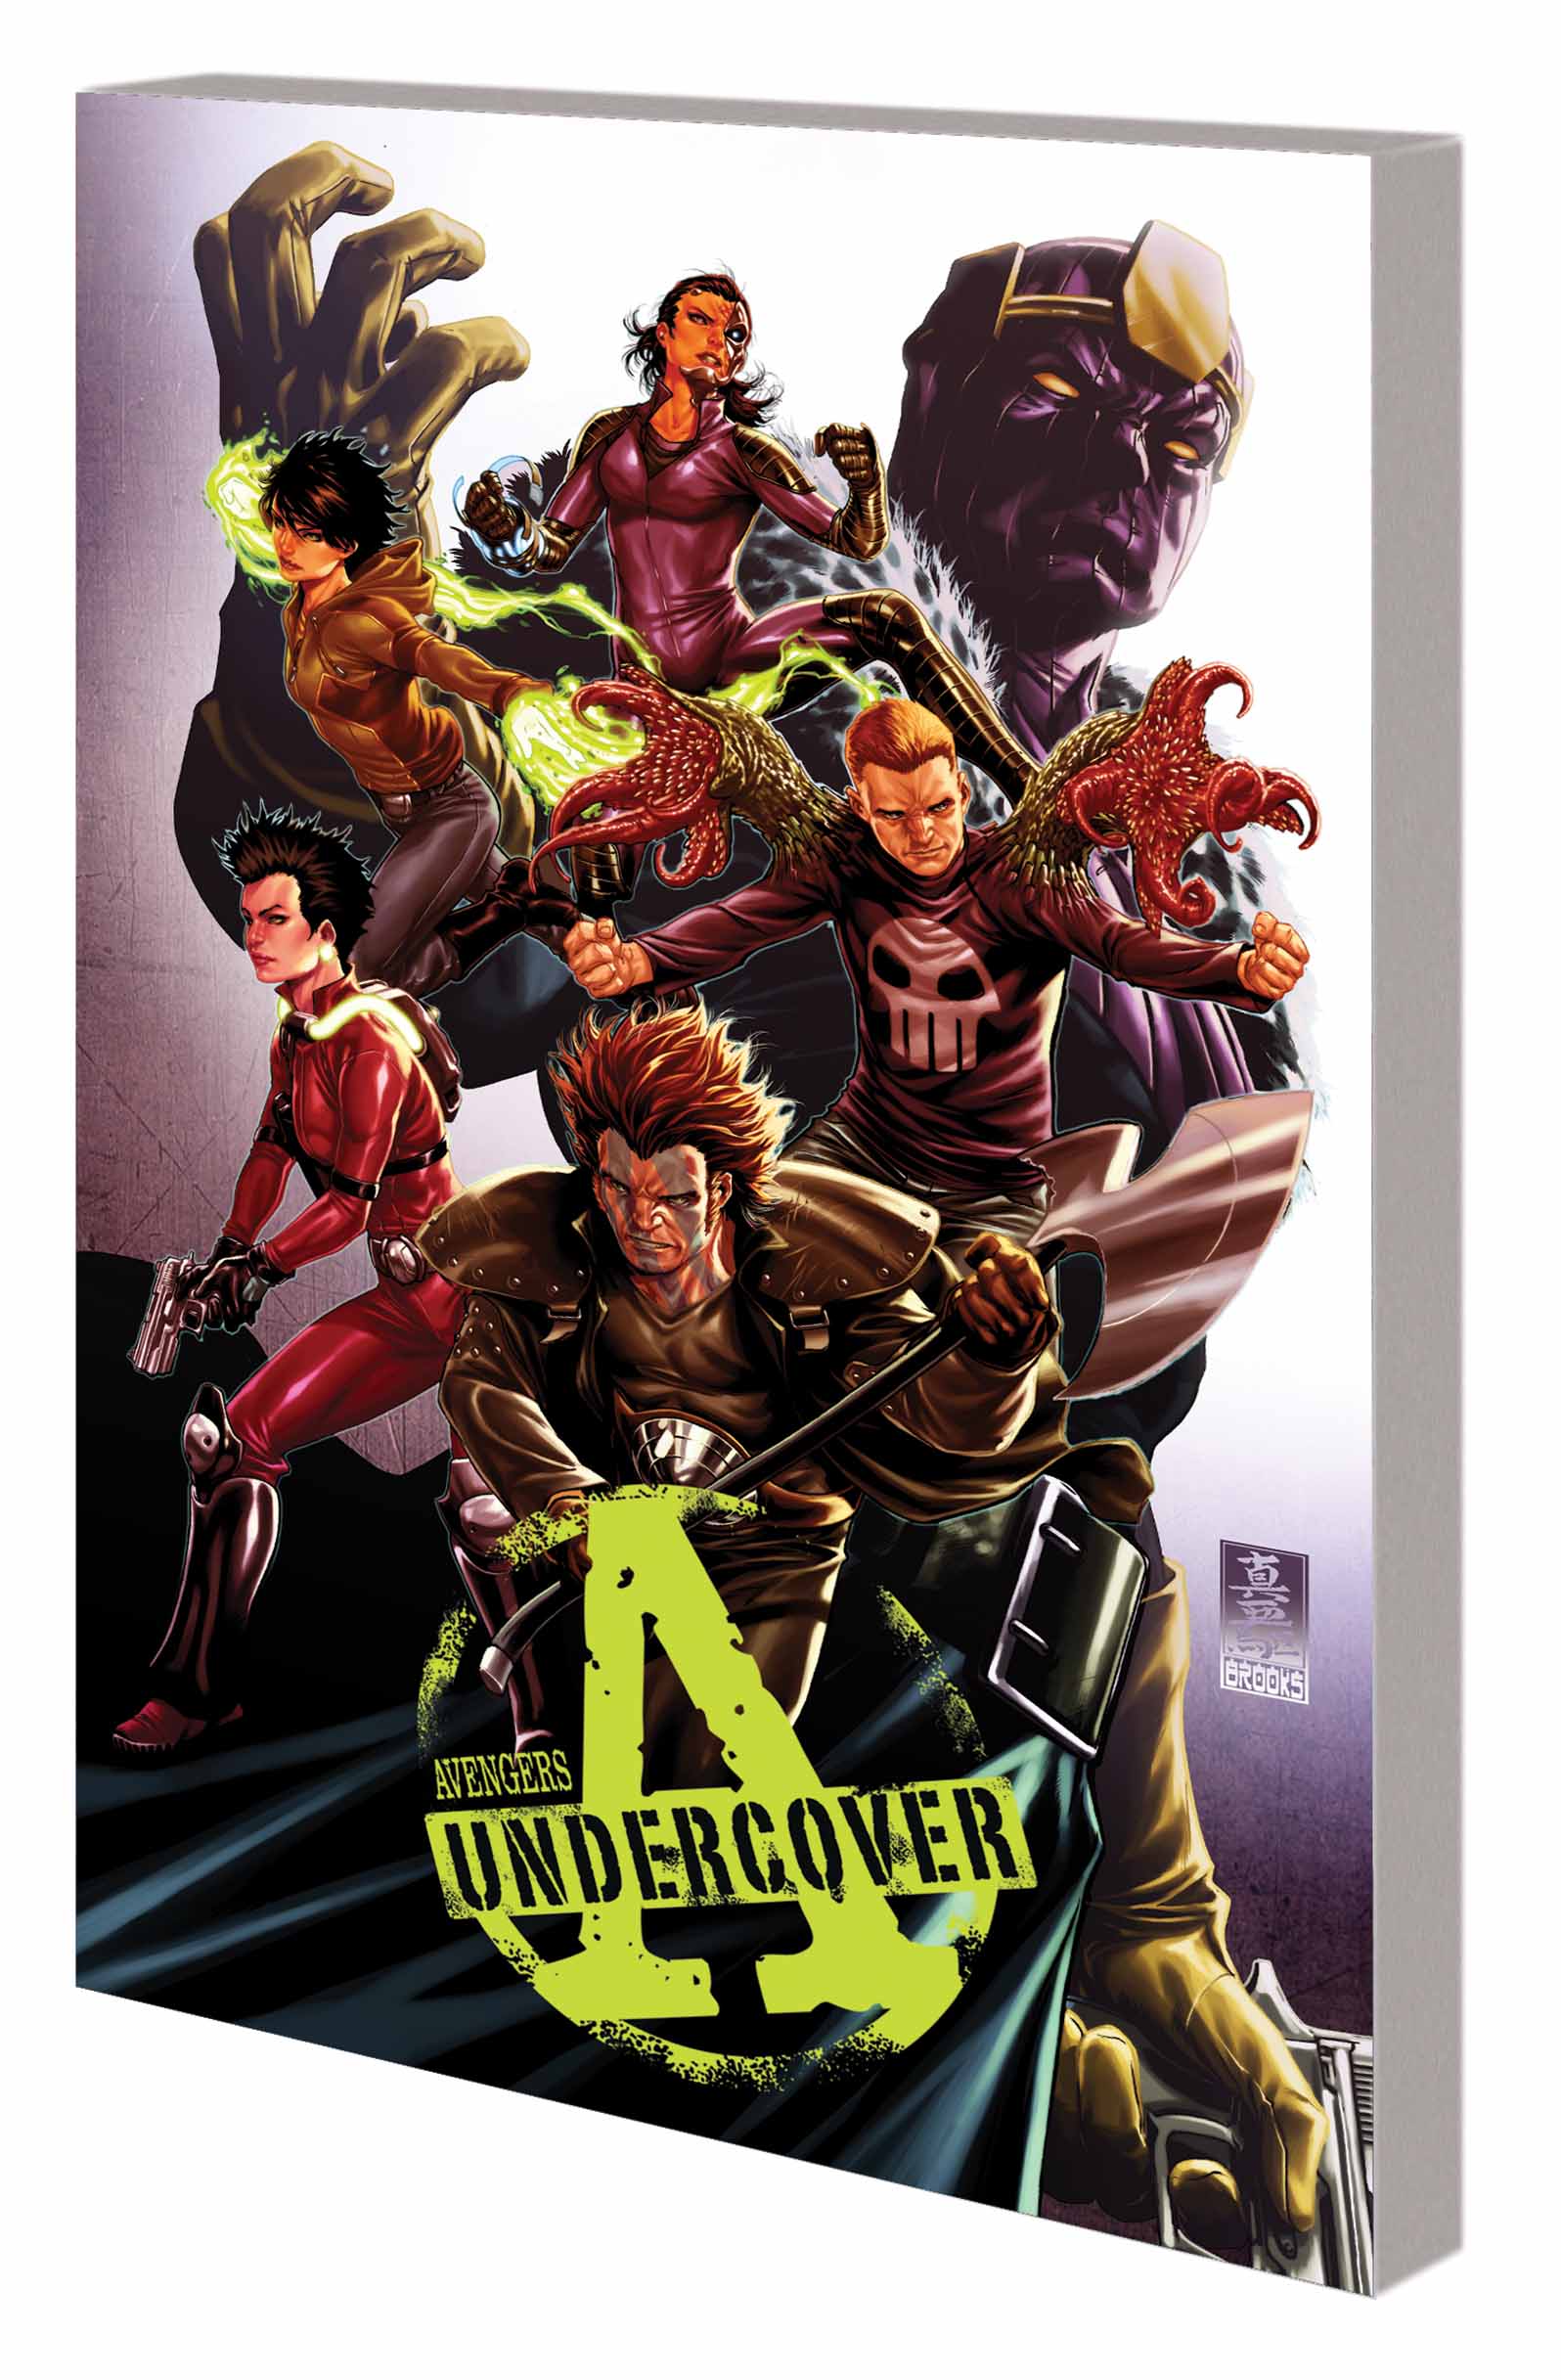 Avengers Undercover Vol. 1: Descent (Trade Paperback)